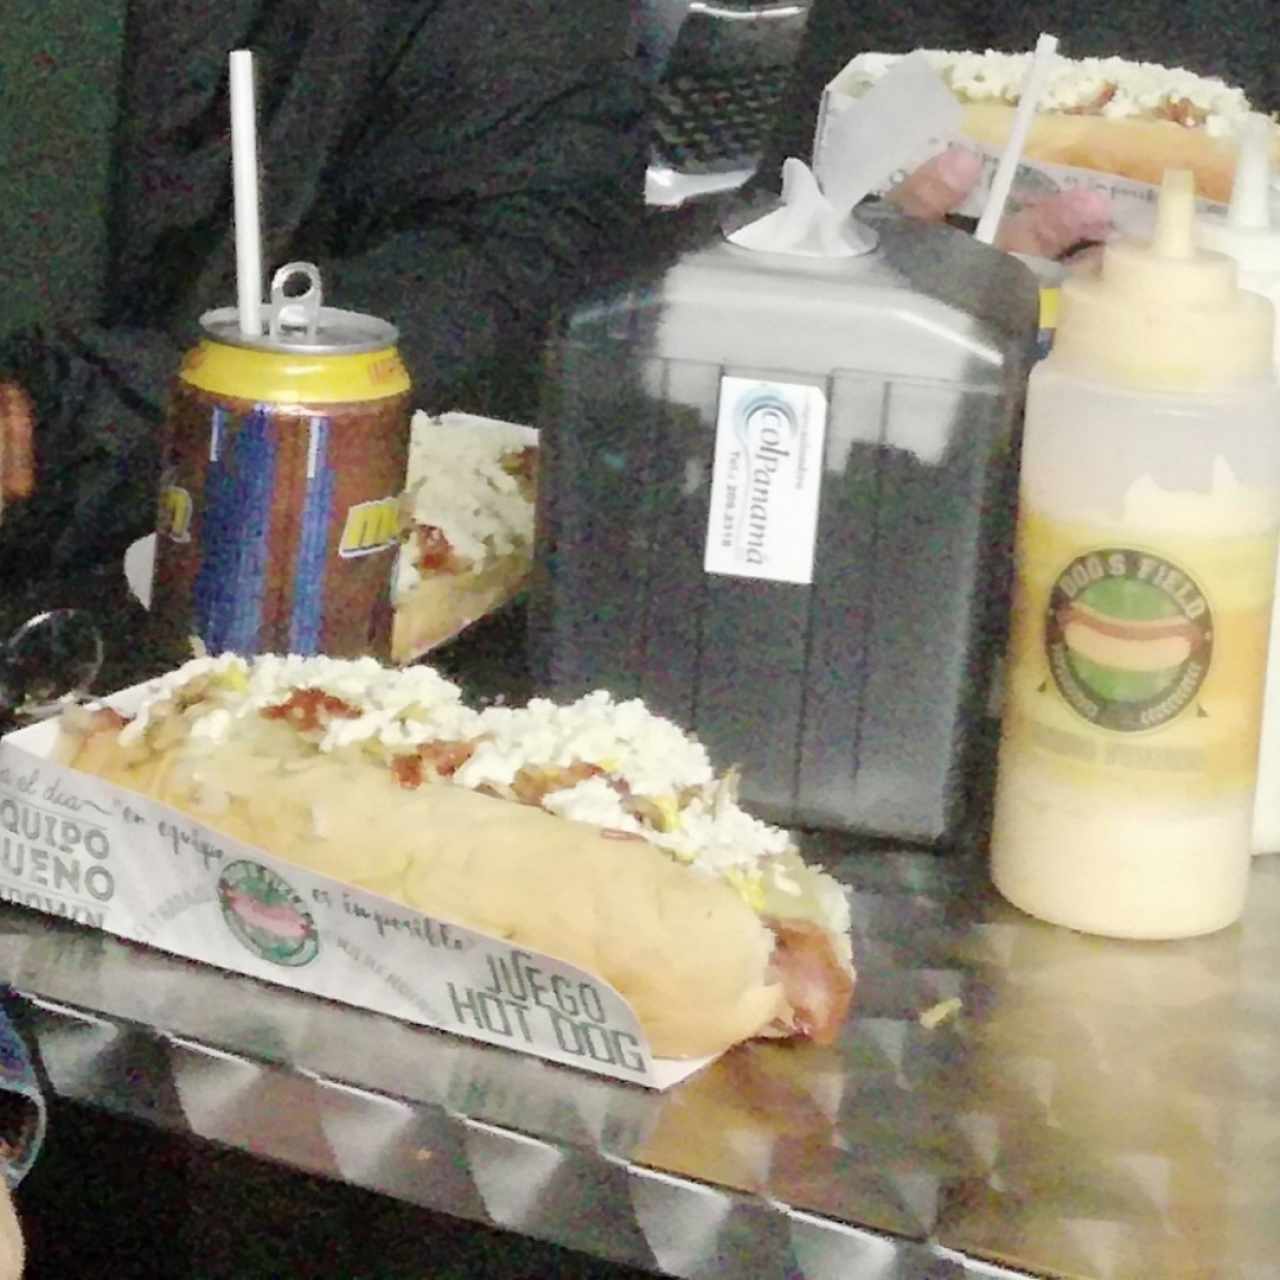 Hot Dog de Carne